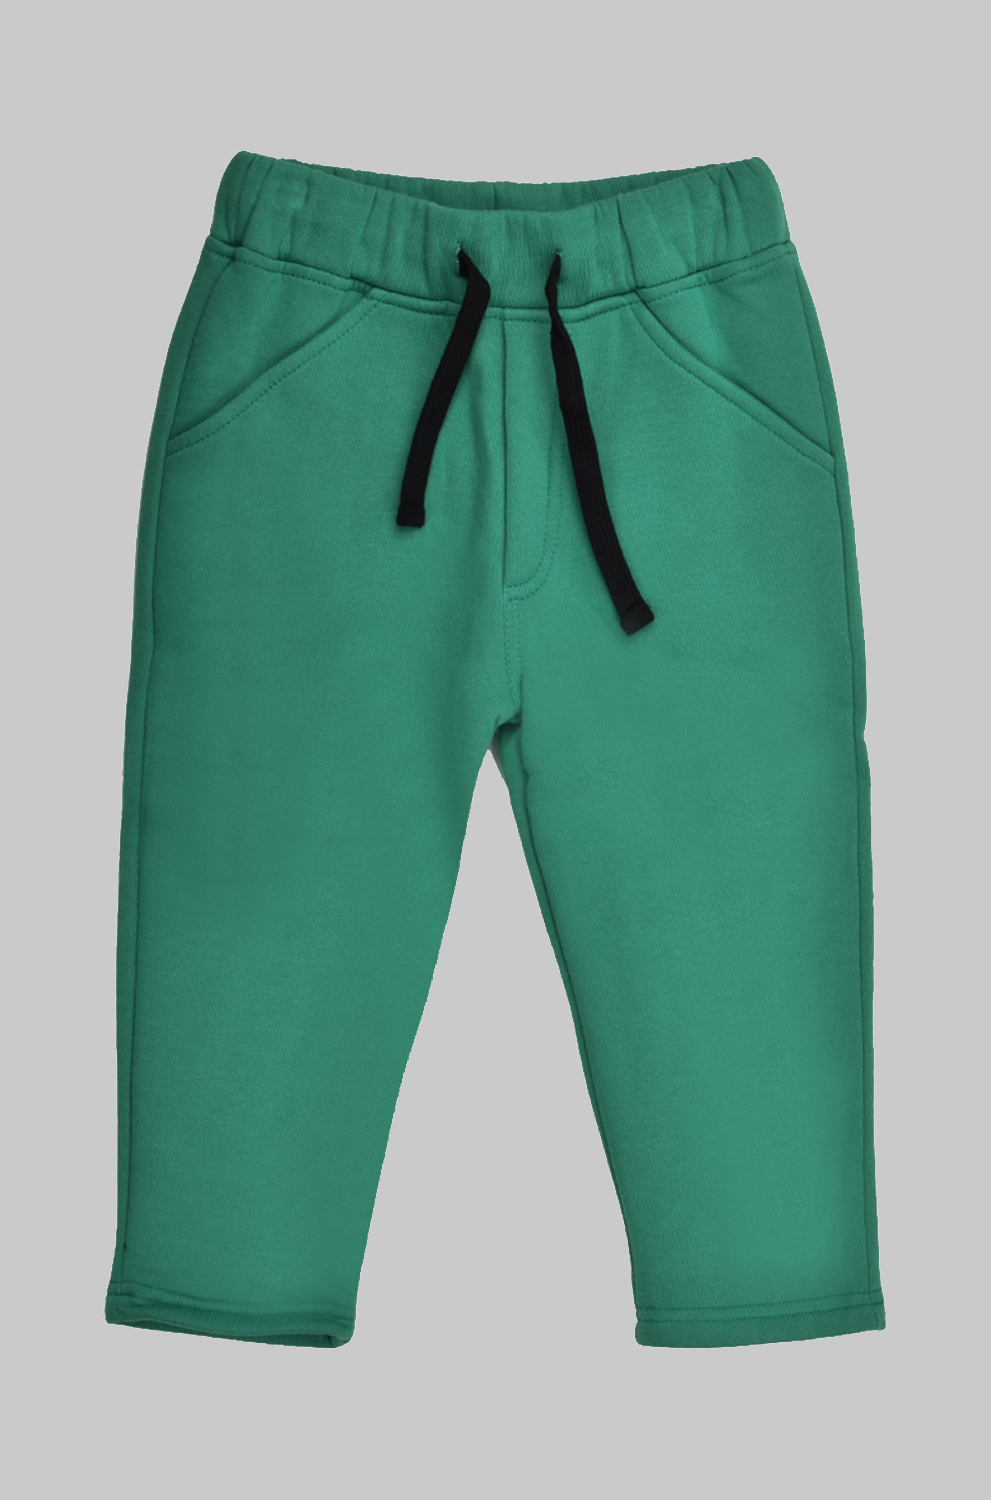 Green Comfort Fit Pants